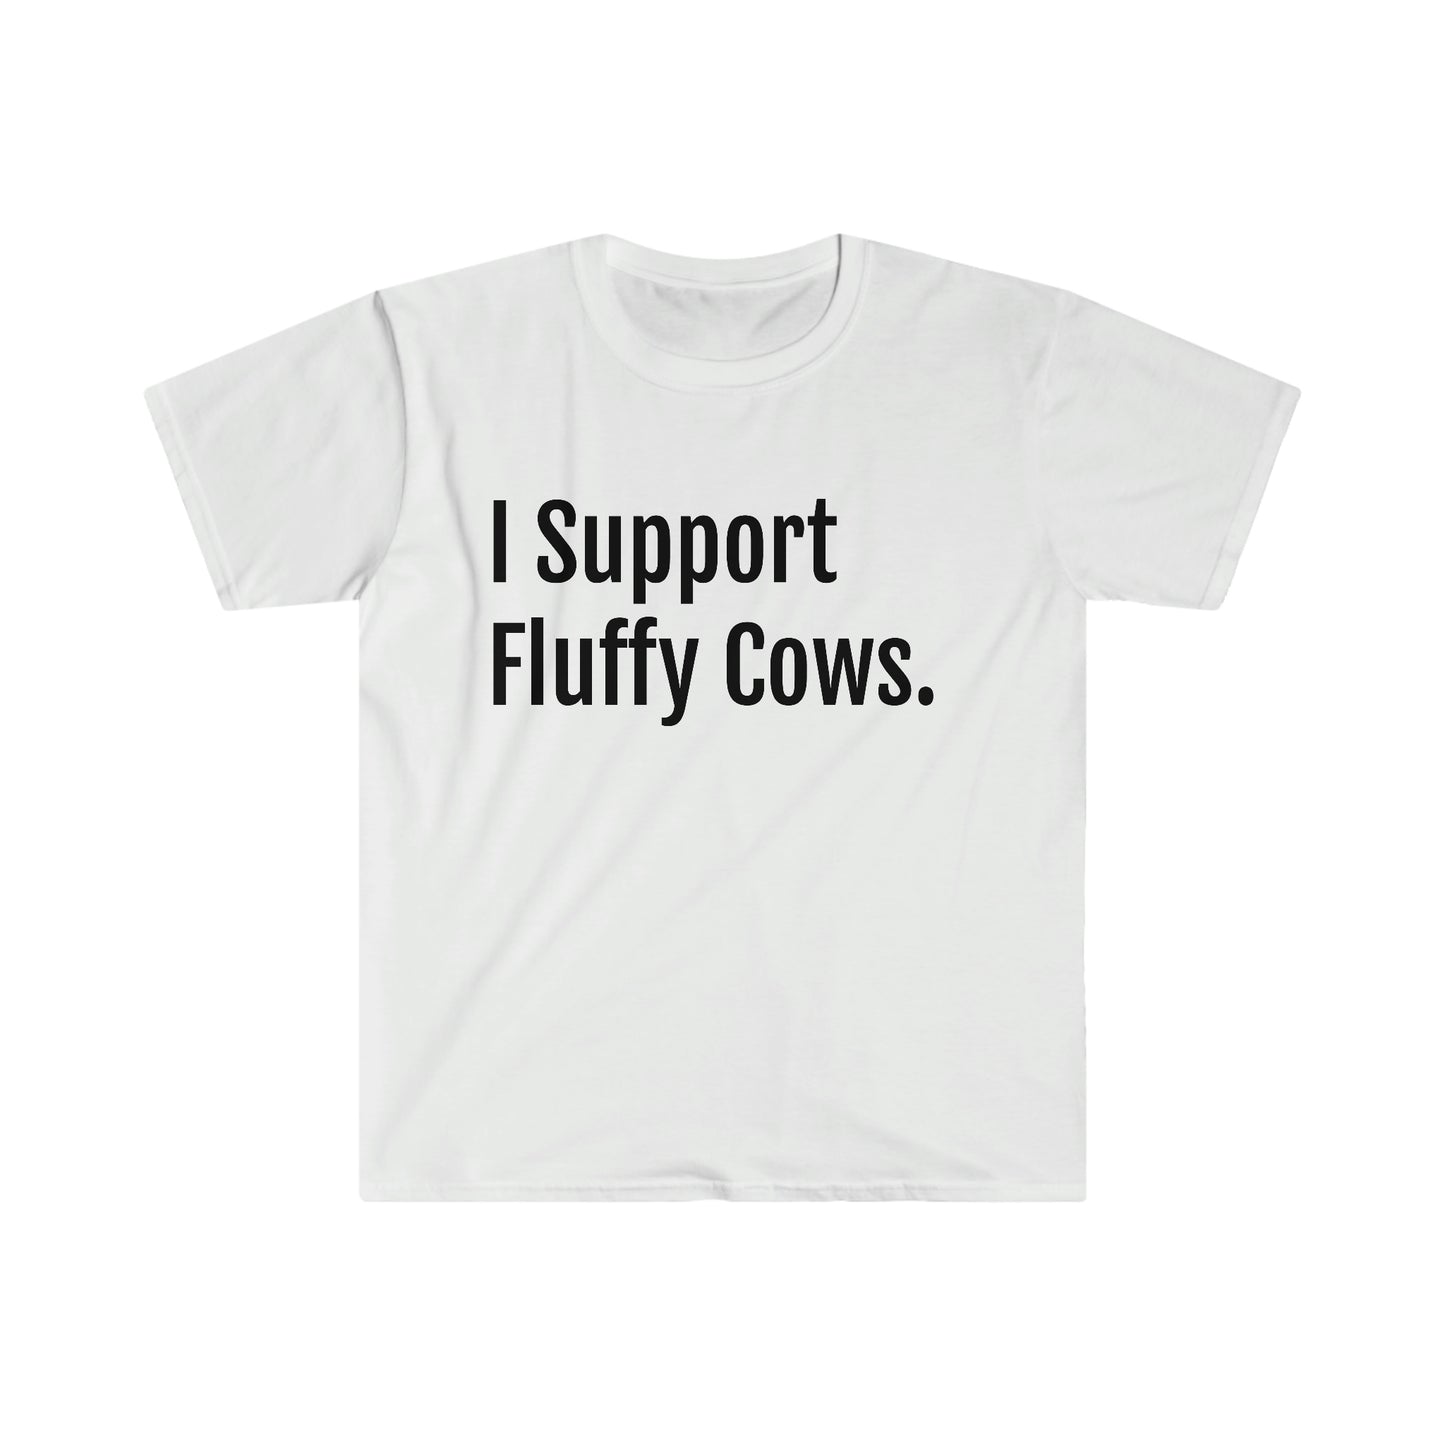 Fluffy Cows